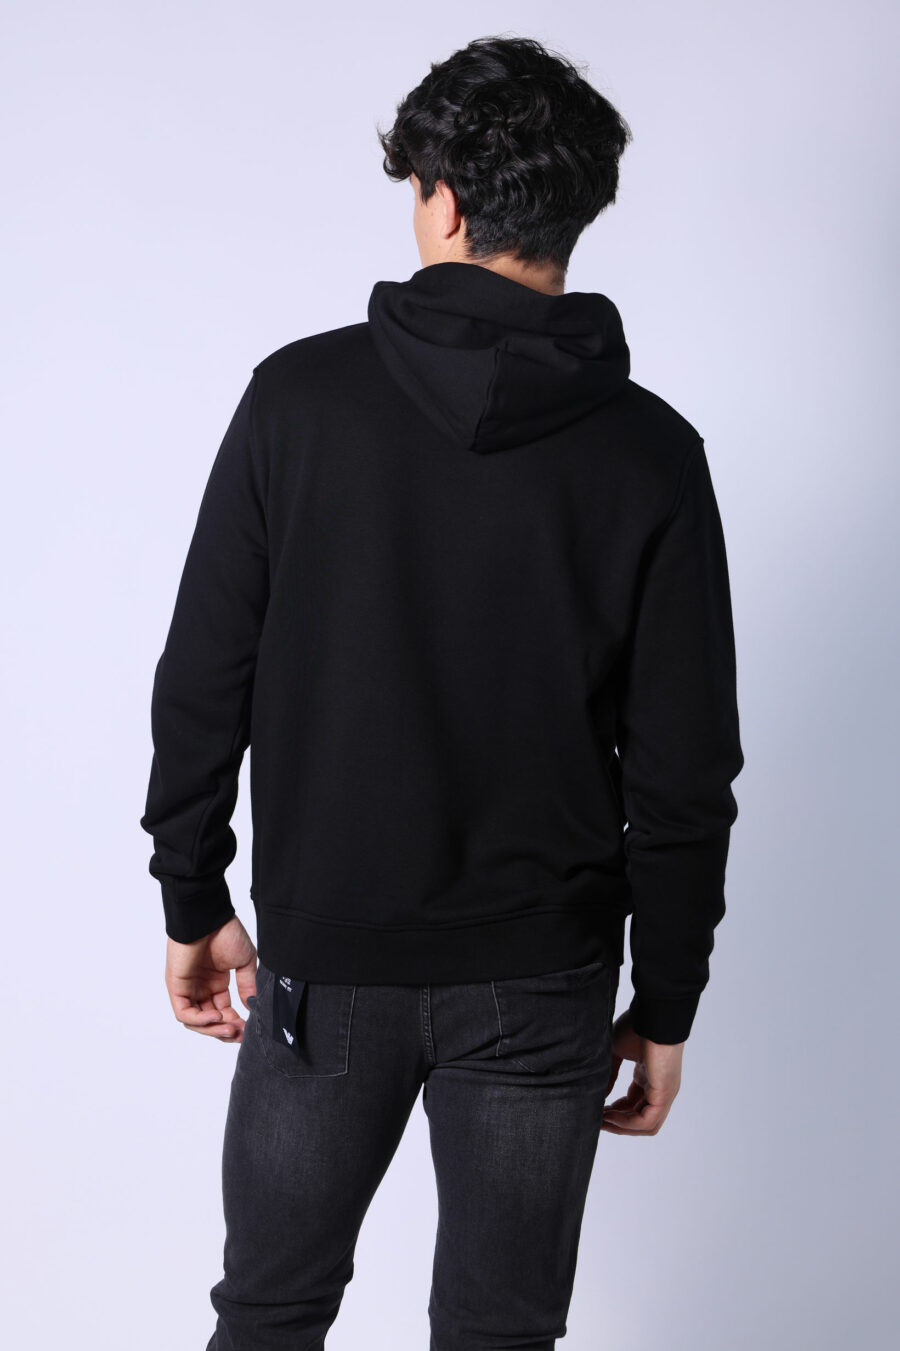 Black sweatshirt with zip and monochrome minilogue - Untitled Catalog 05786